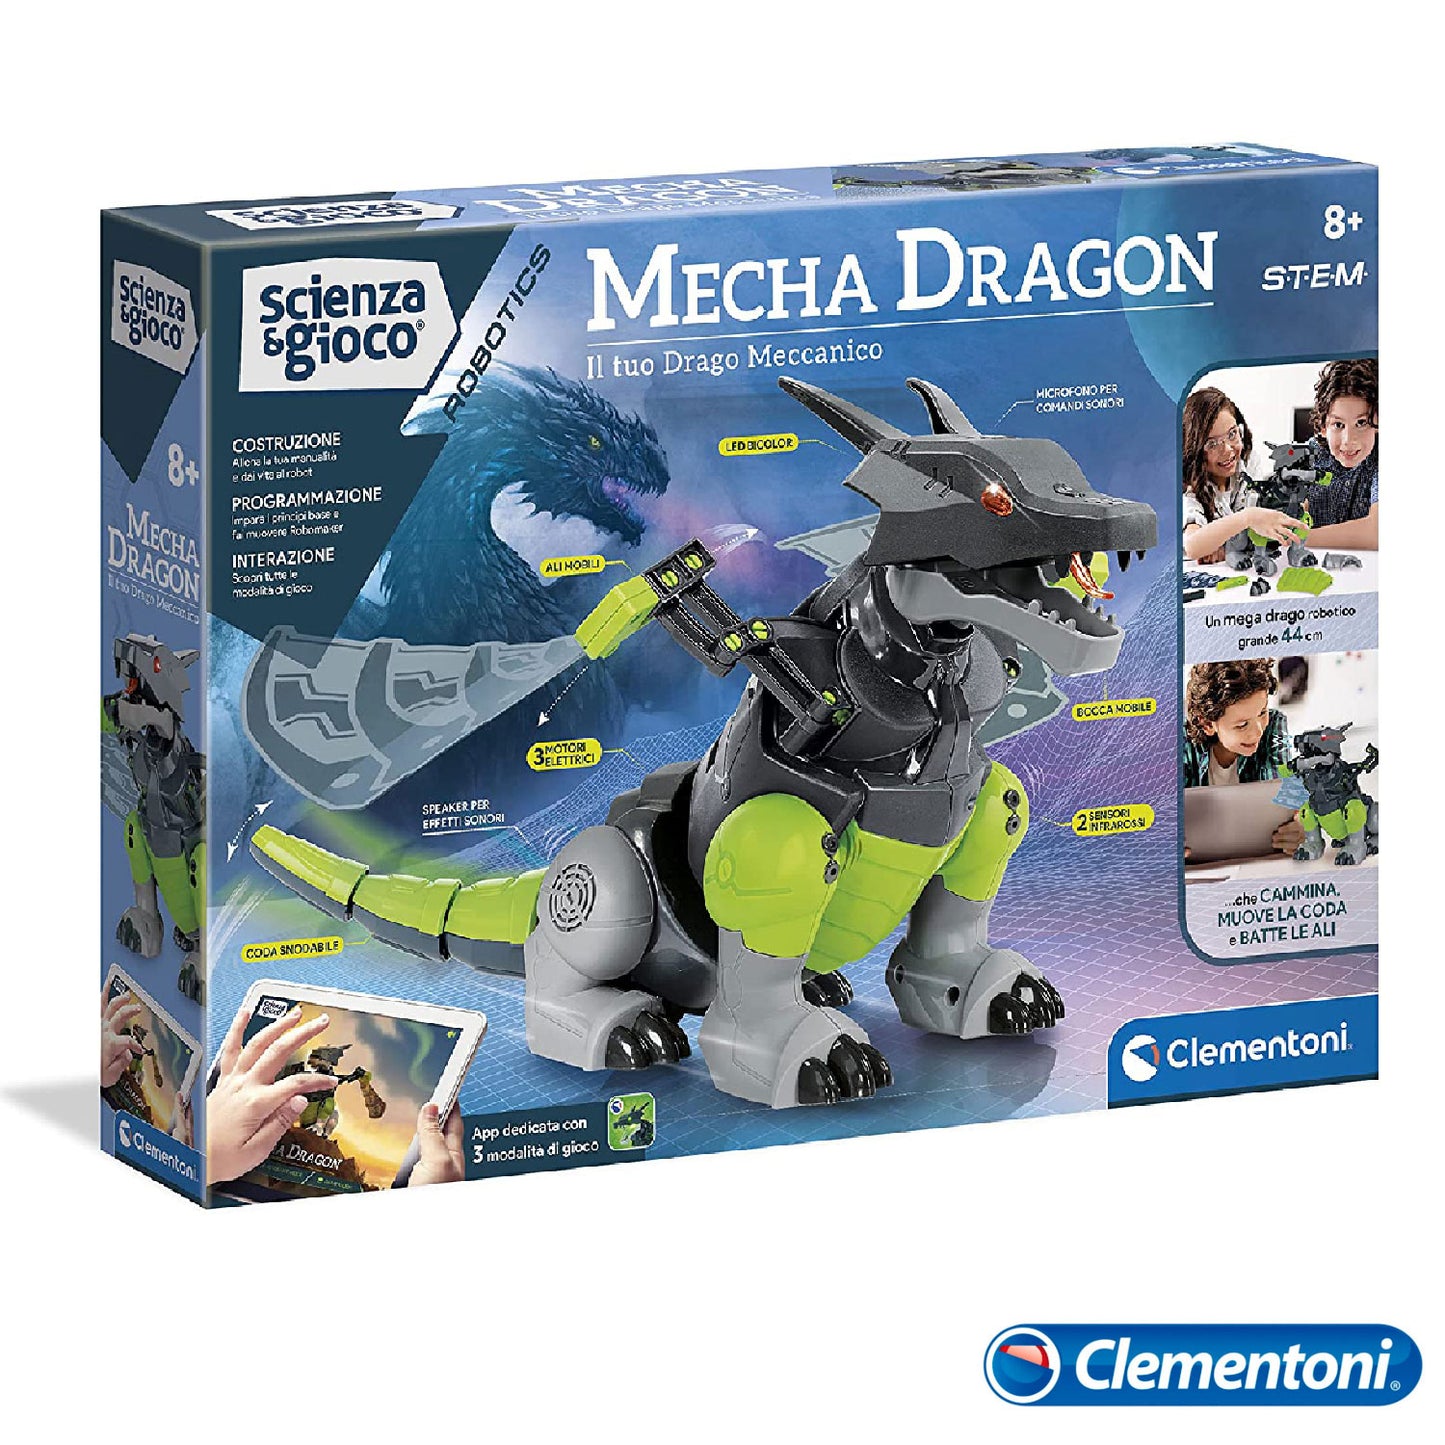 Clementoni - Mecha-Dragon Robot 19170